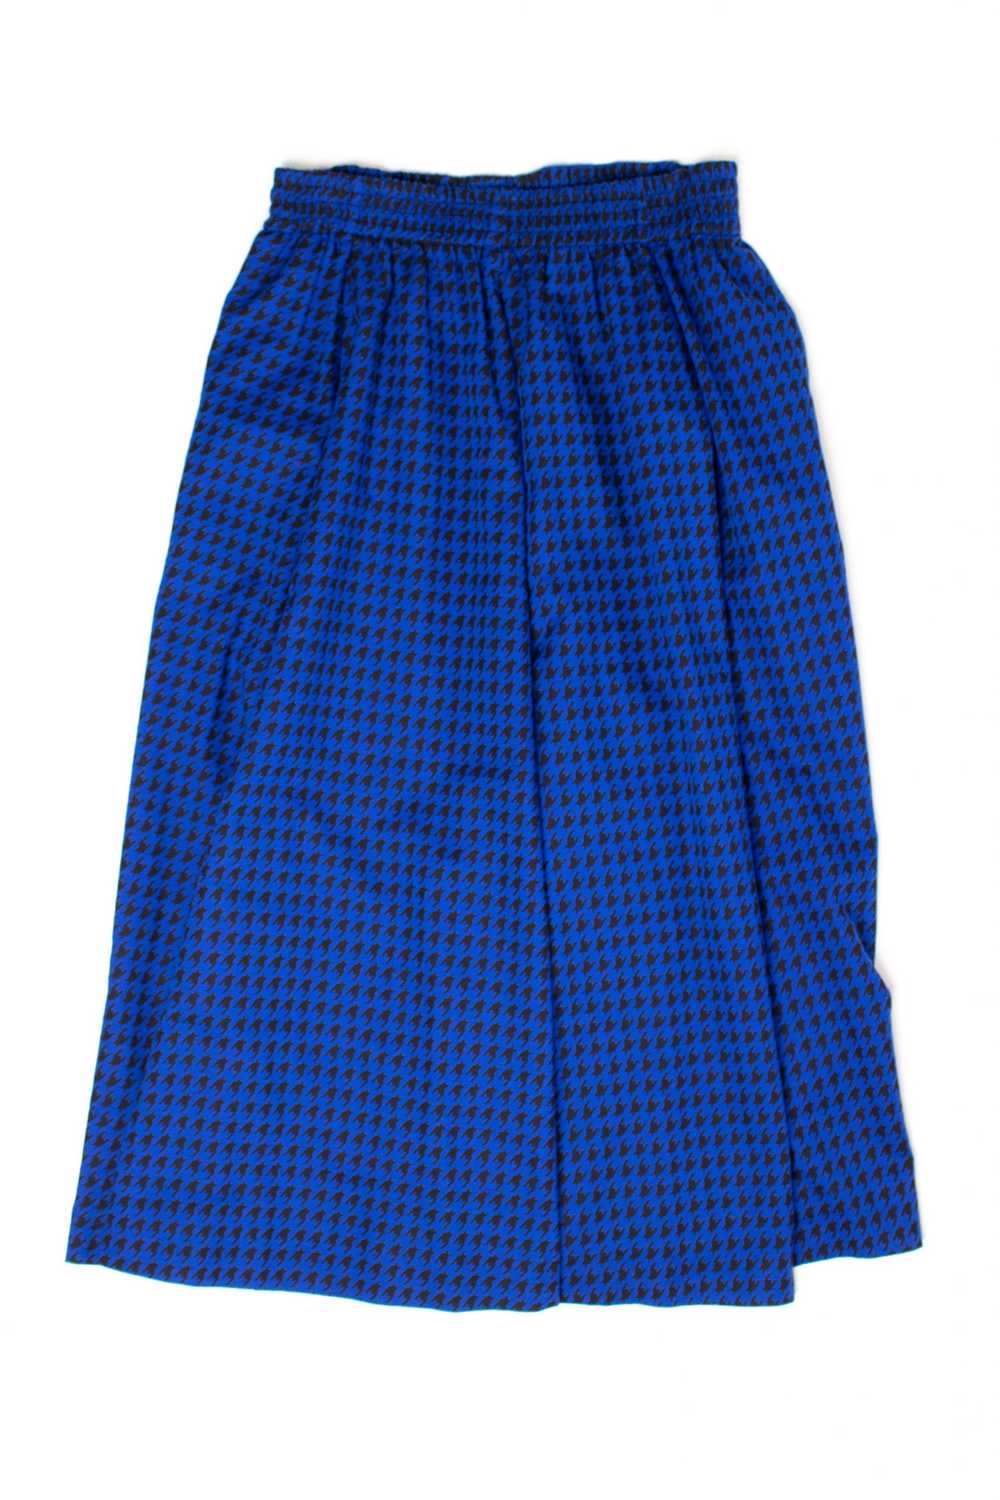 Vintage Black & Blue Houndstooth Midi Skirt - image 2